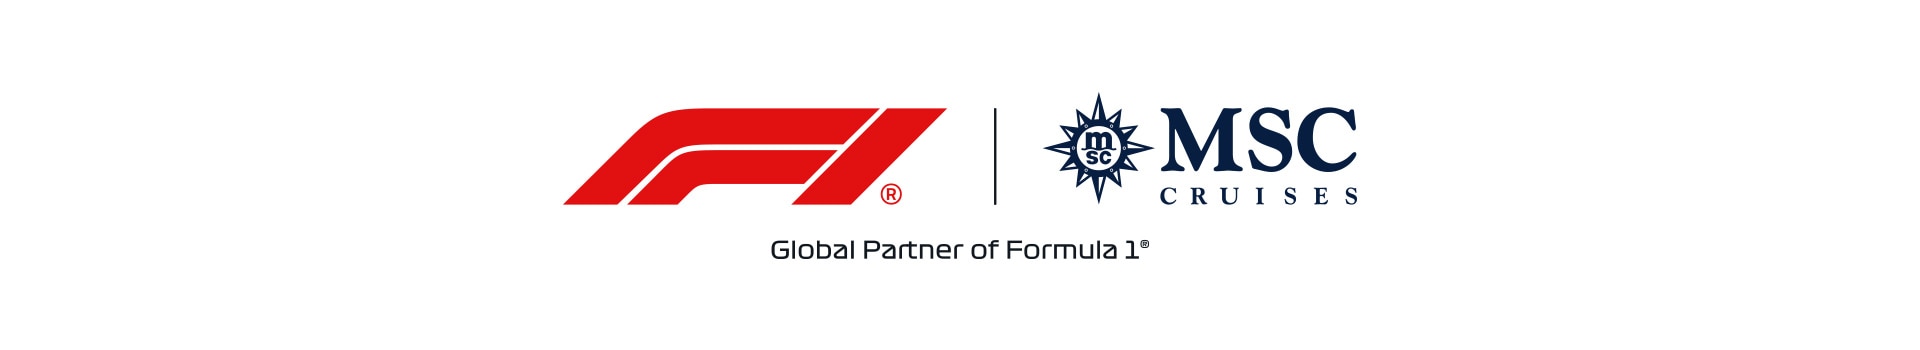 MSC Cruises & Formula 1® -  Global Partner of Formula 1®